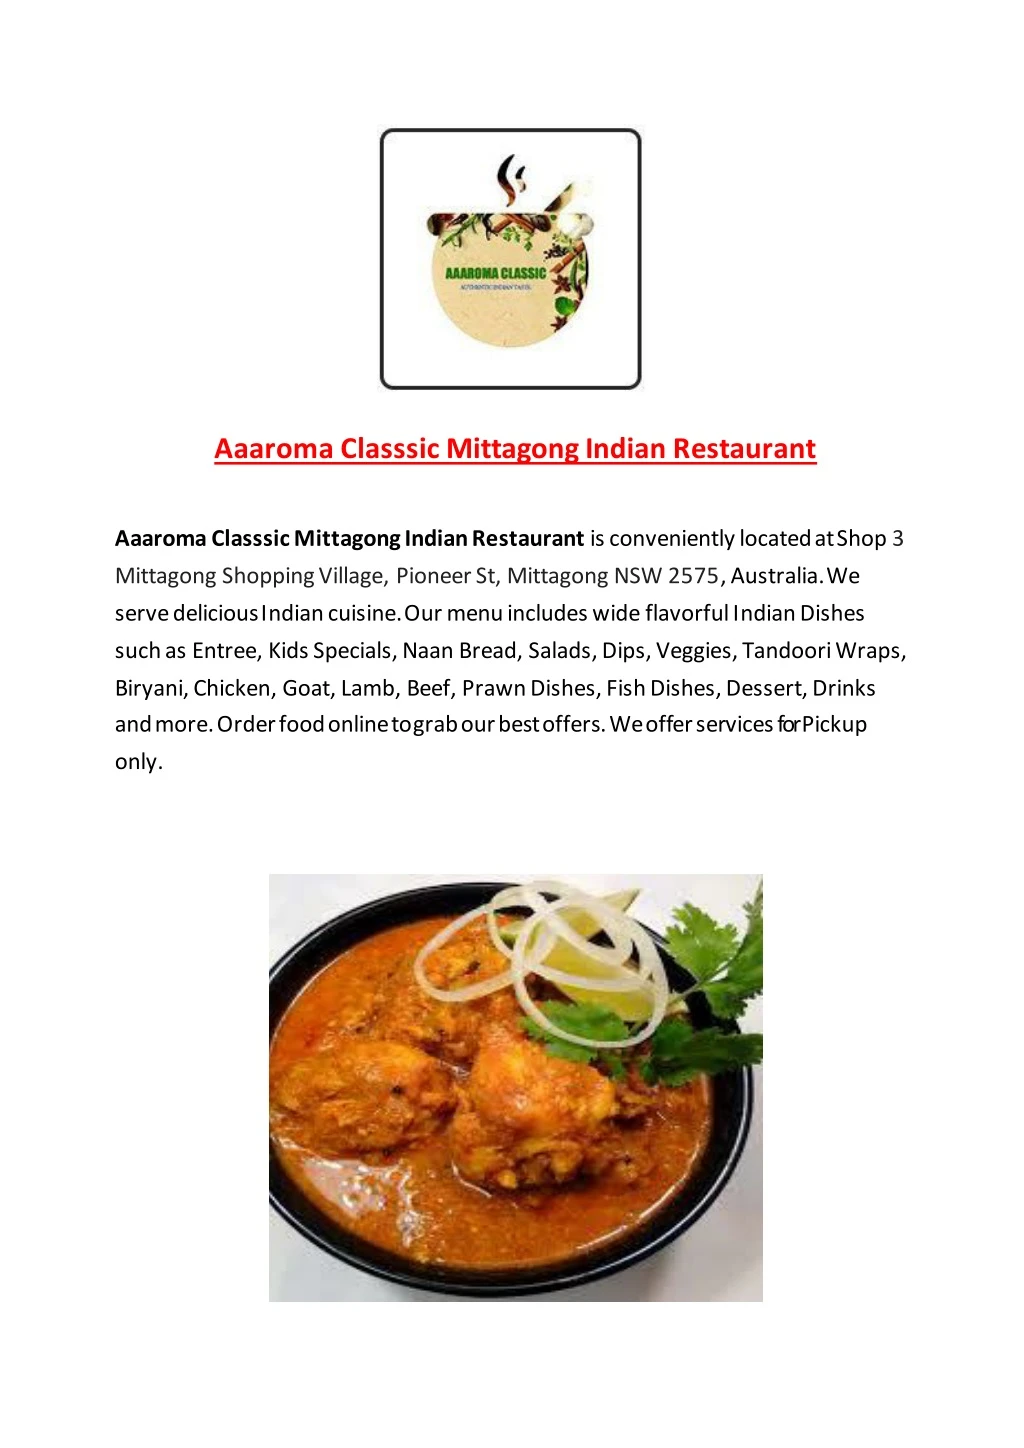 aaaroma classsic mittagong indian restaurant